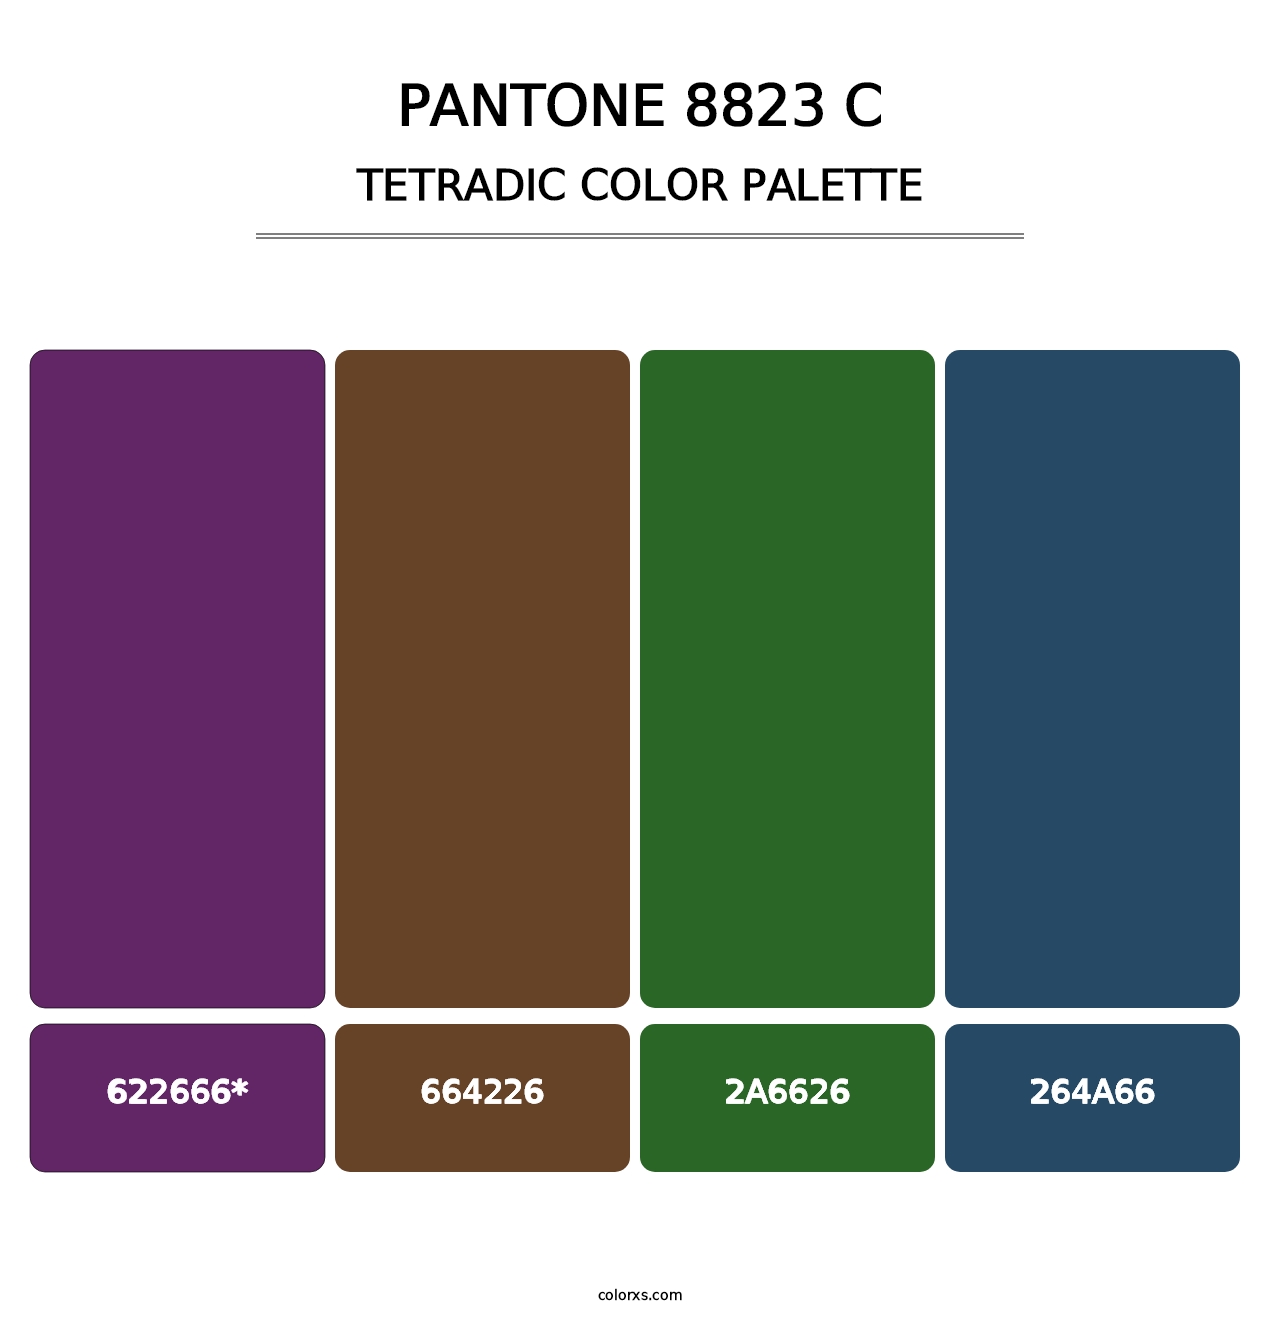 PANTONE 8823 C - Tetradic Color Palette